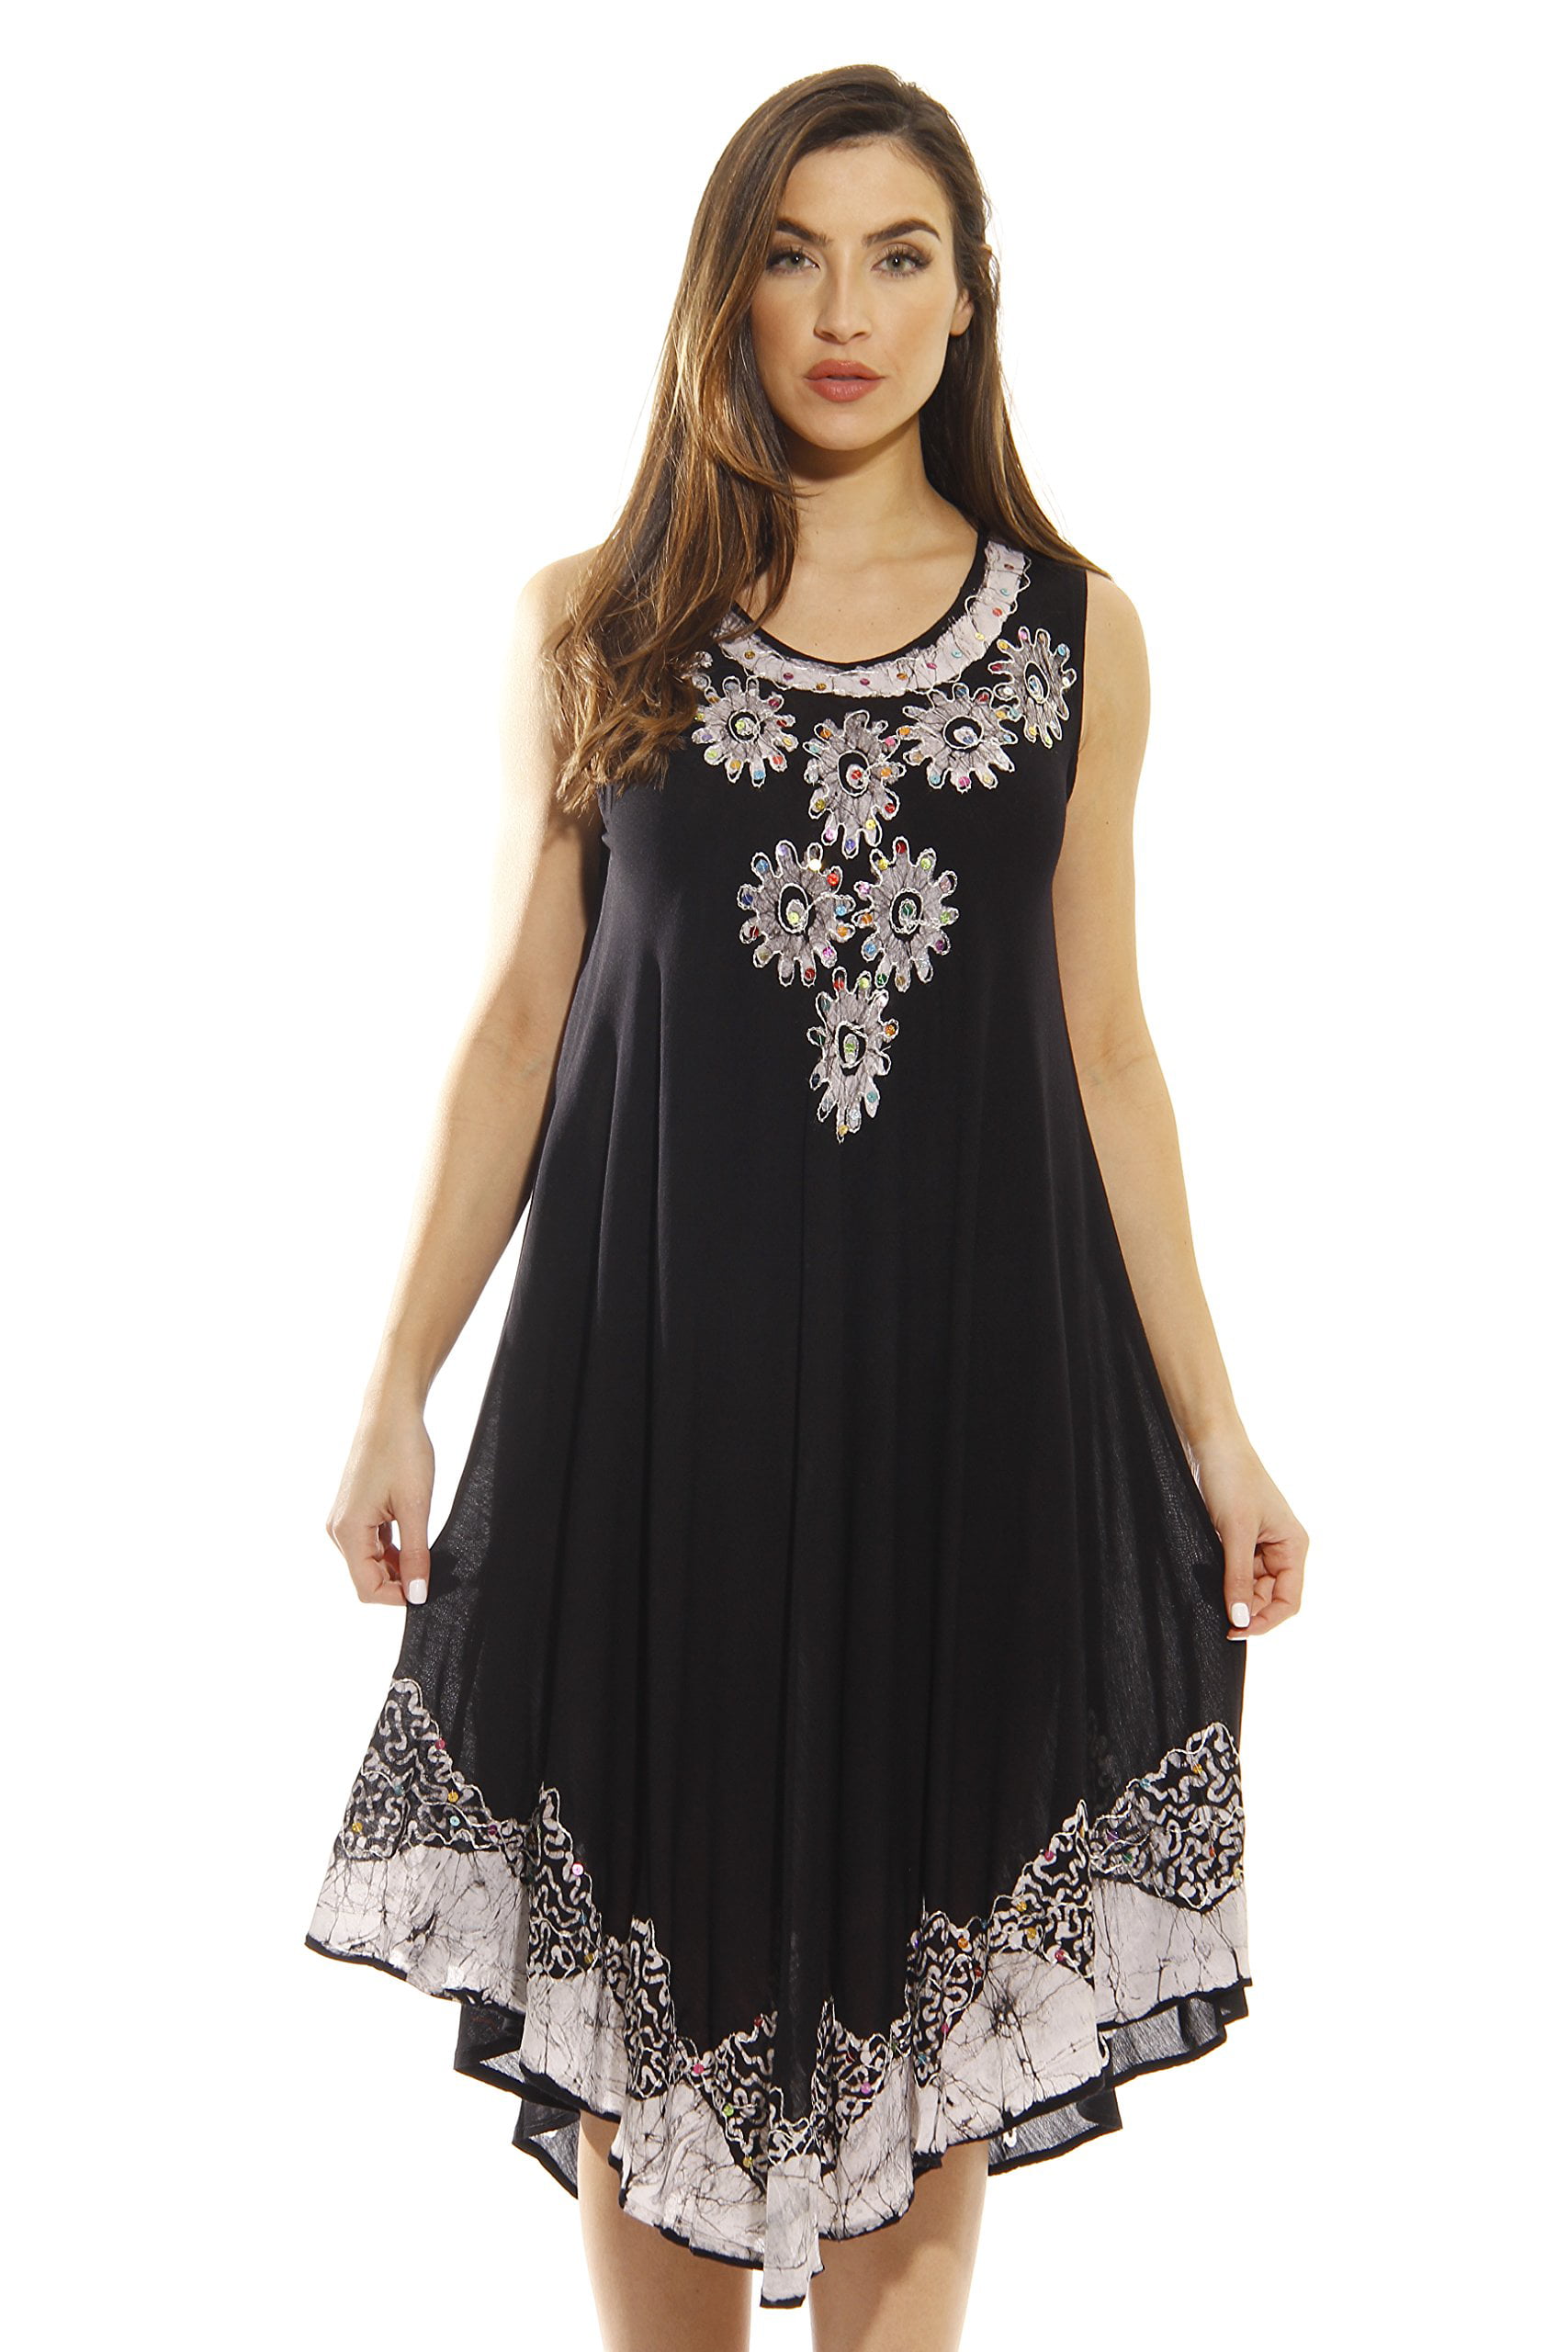 Riviera Sun - Floral Batik Sundresses for Women (Black / White, 1X ...